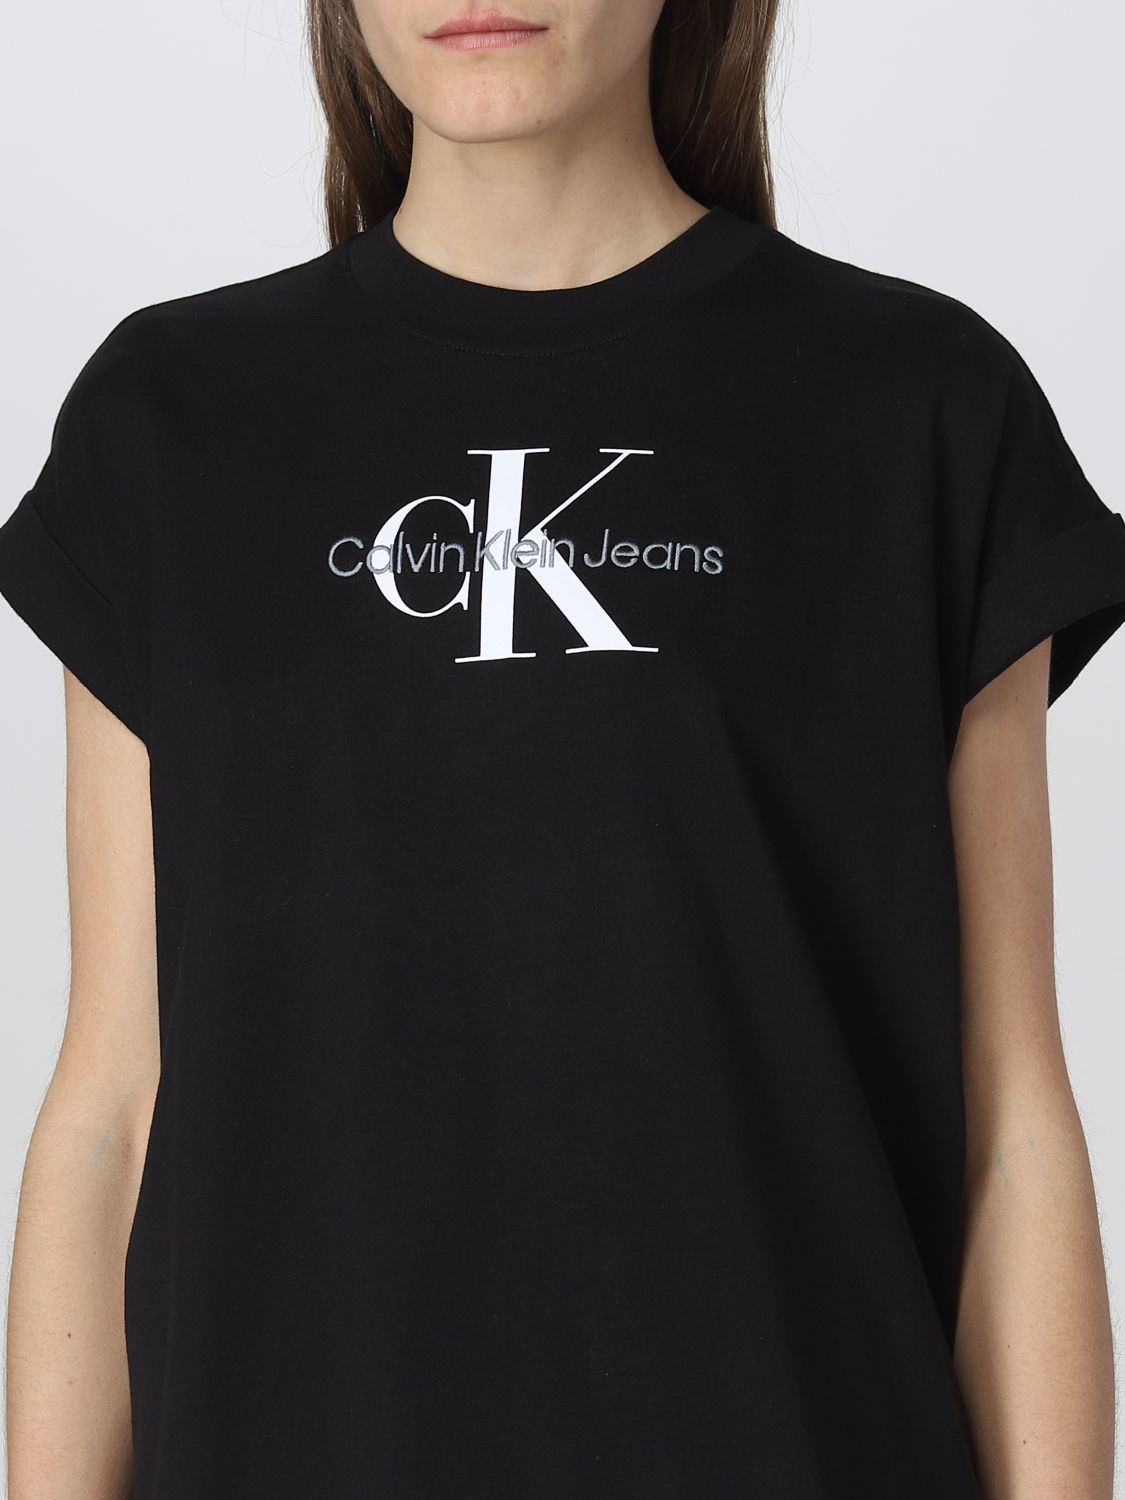 CALVIN KLEIN JEANS: t-shirt for woman - Black | Calvin Klein Jeans t ...